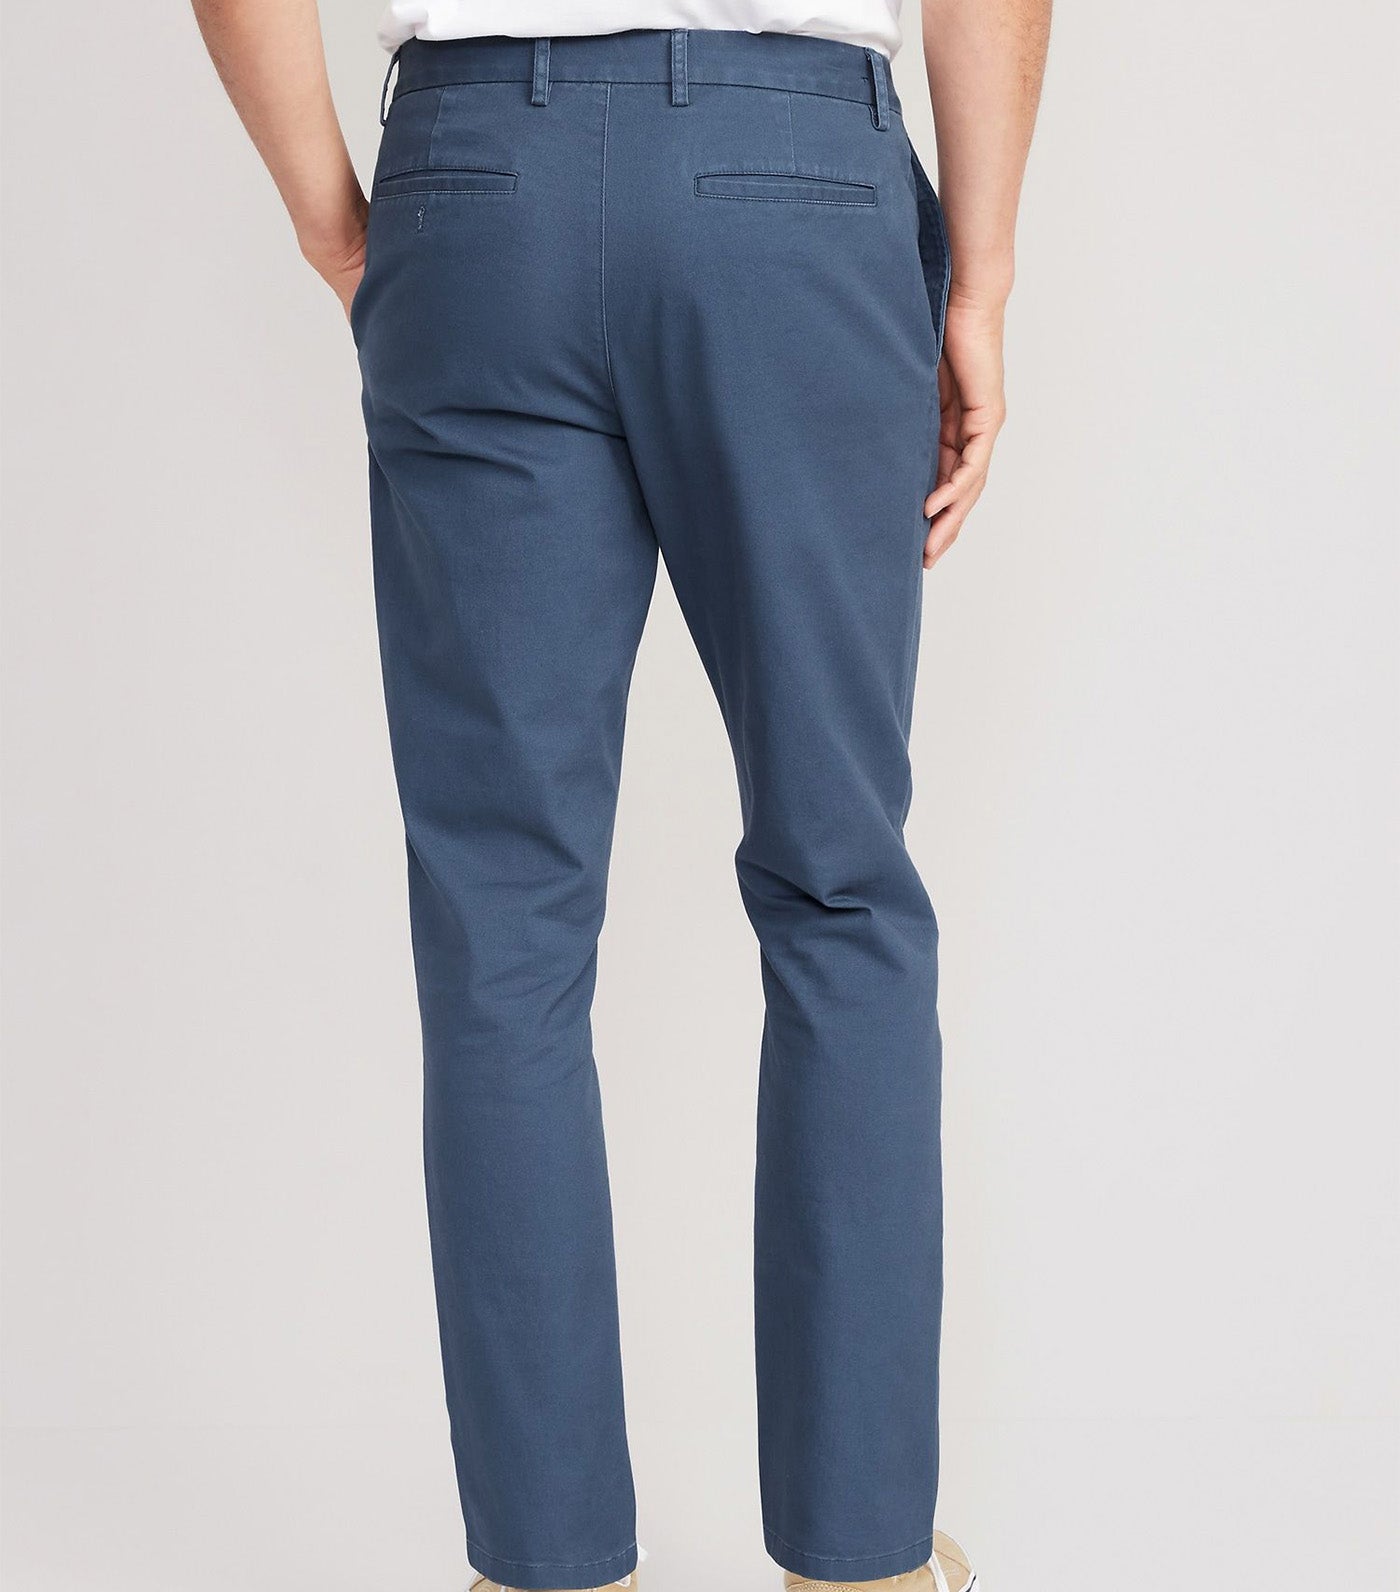 Slim Built-In Flex Rotation Chino Pants for Men Calm Night